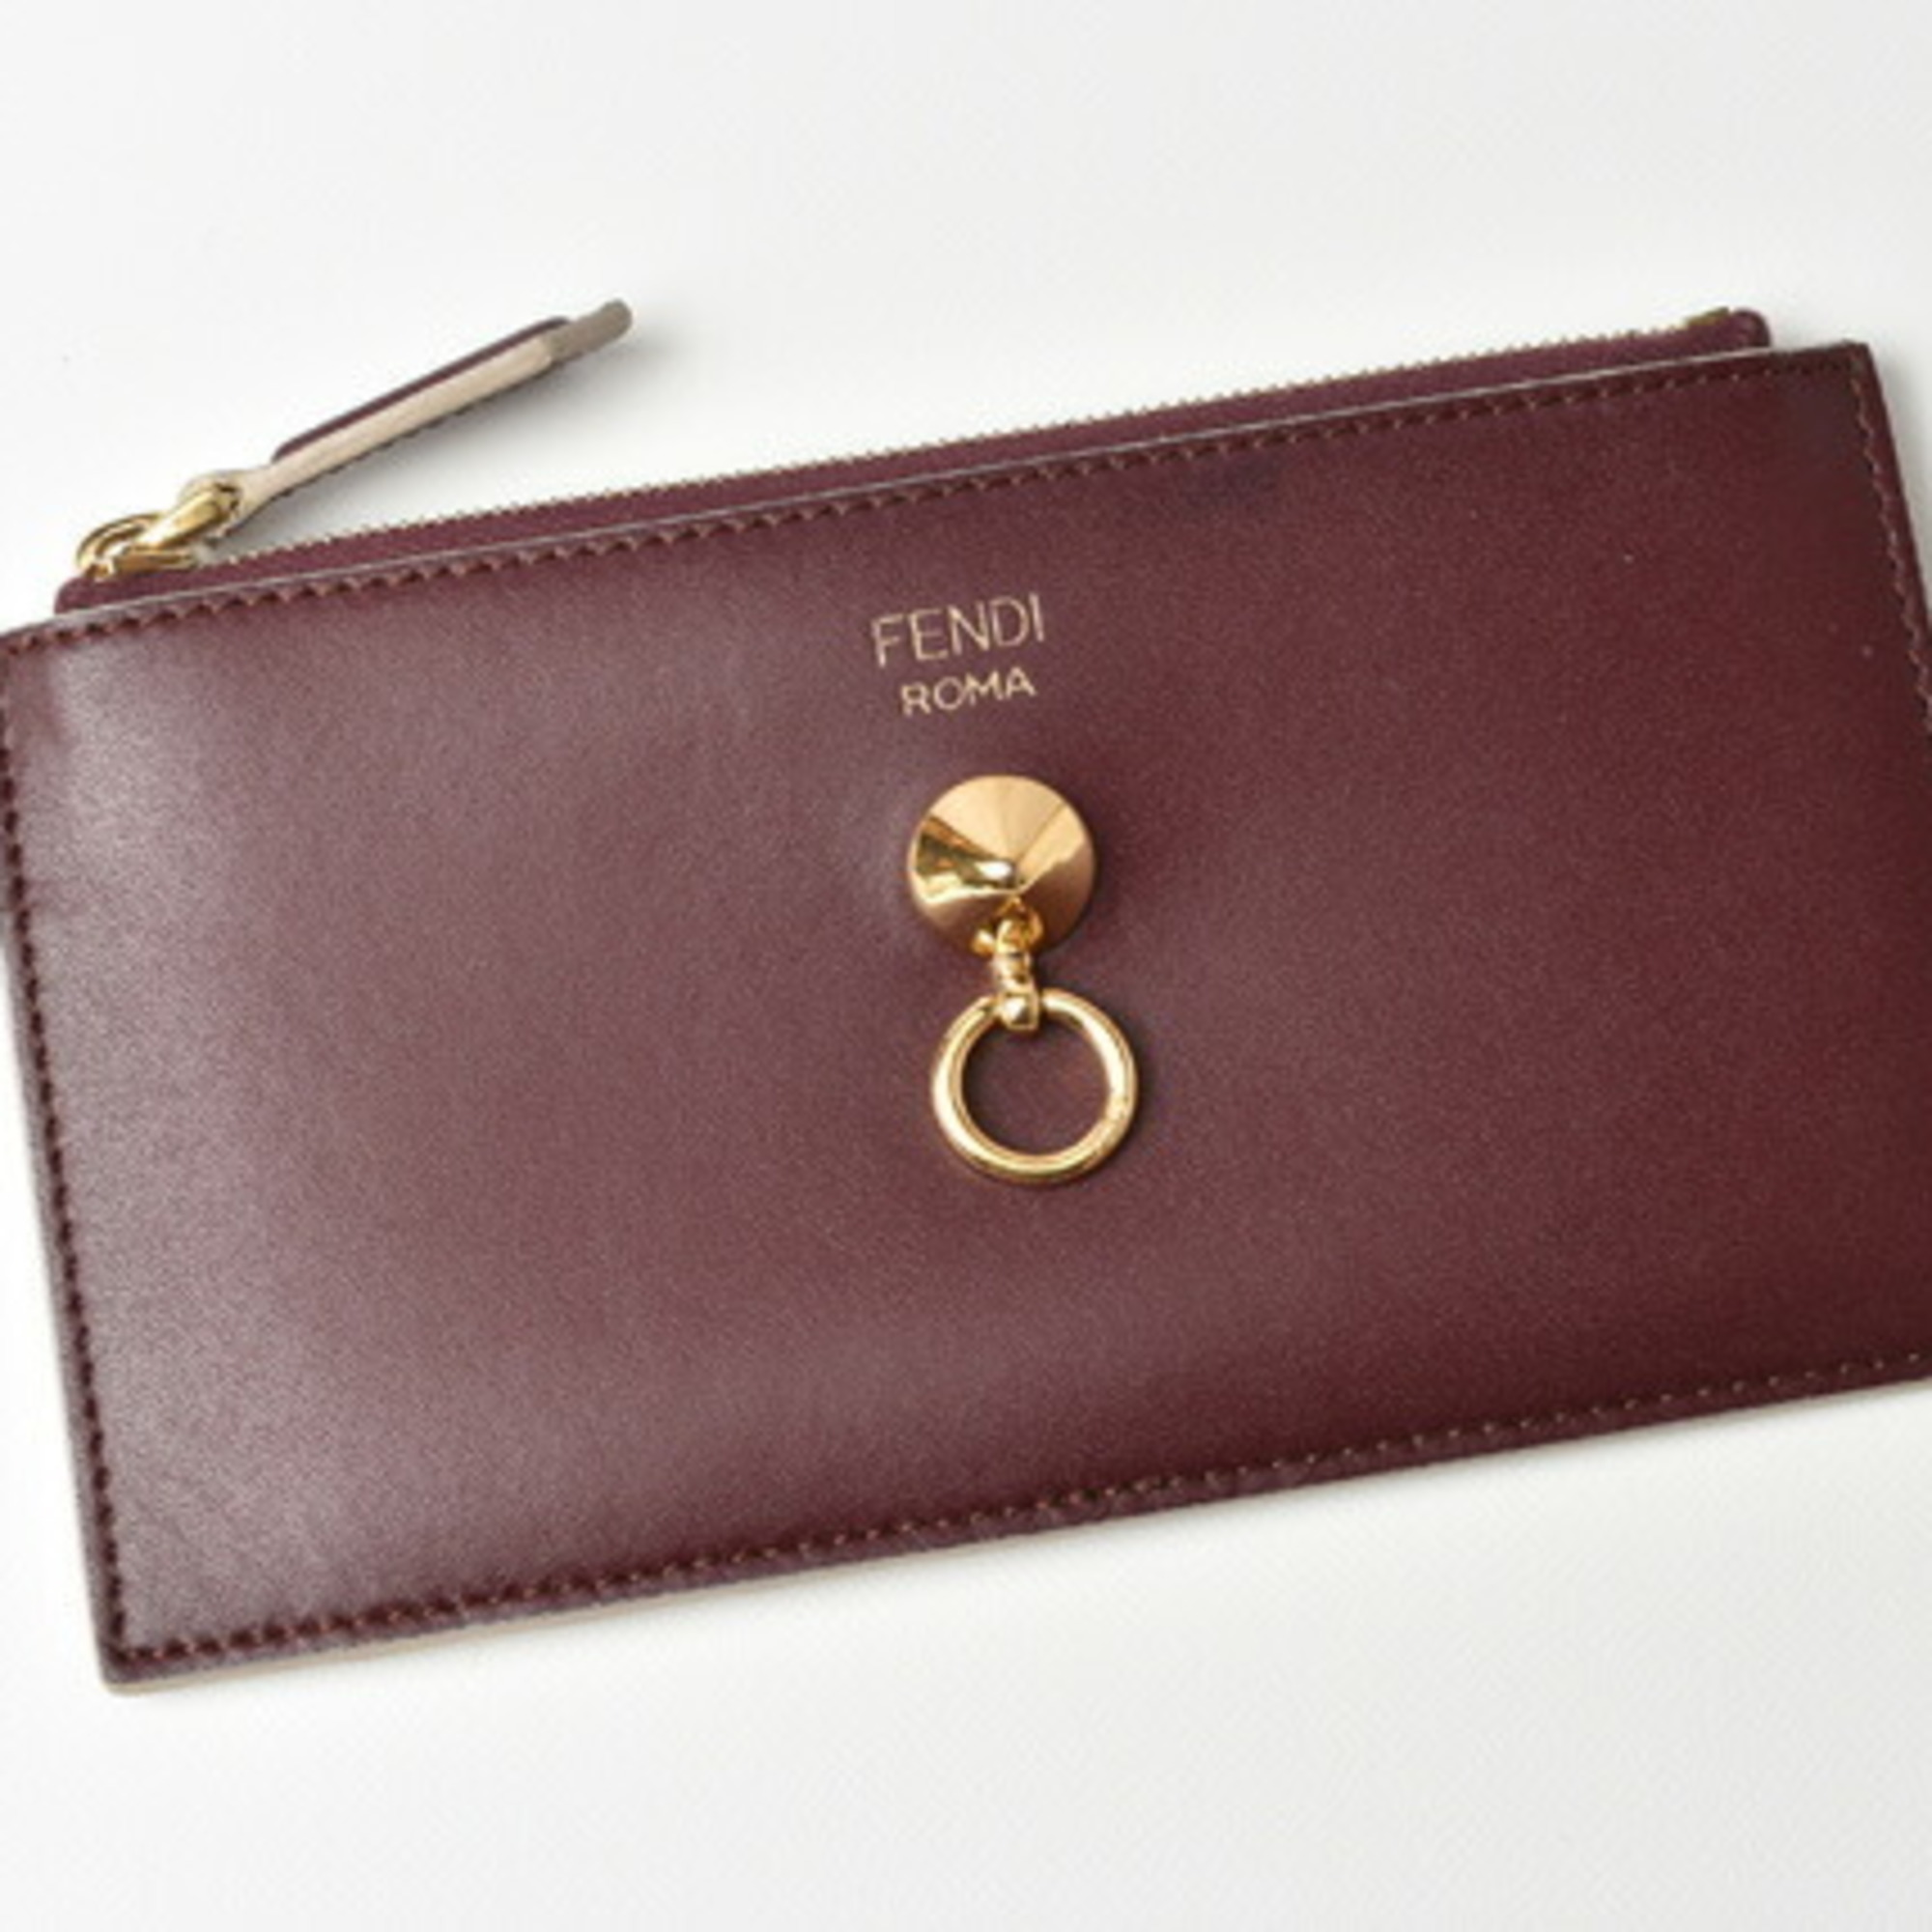 Fendi mini wallet FENDI coin case card pass BY THE WAY visor way burgundy 8M0388